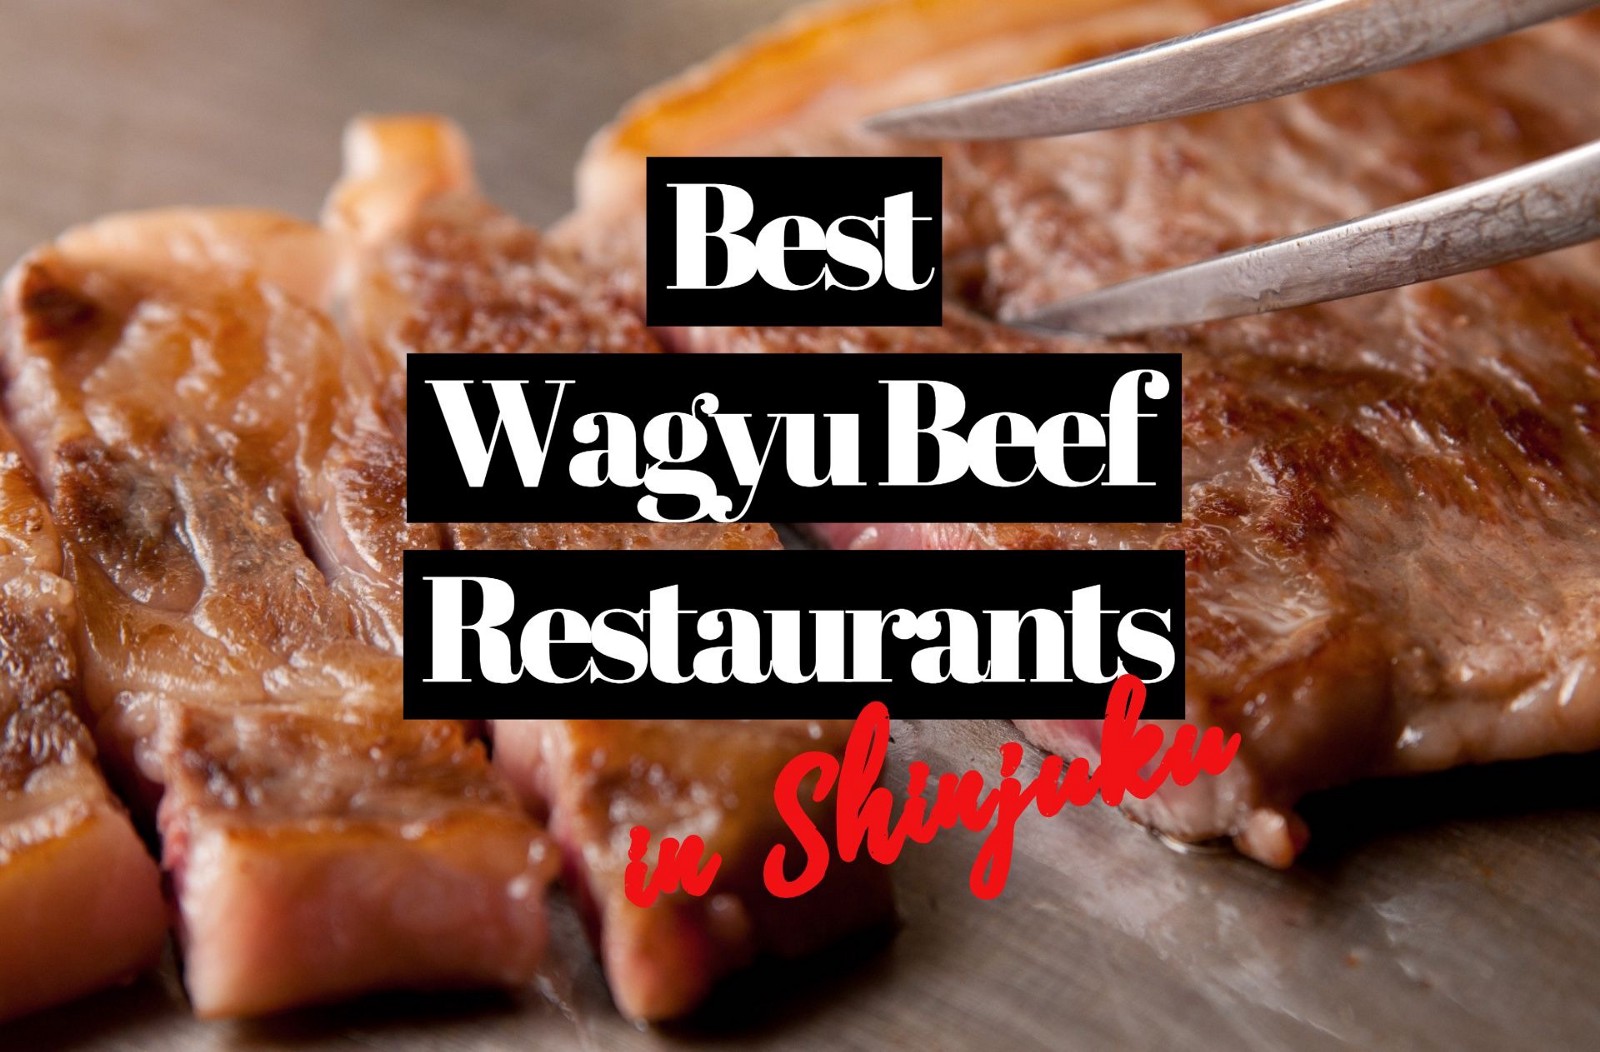 Best Wagyu Beef in Shinjuku